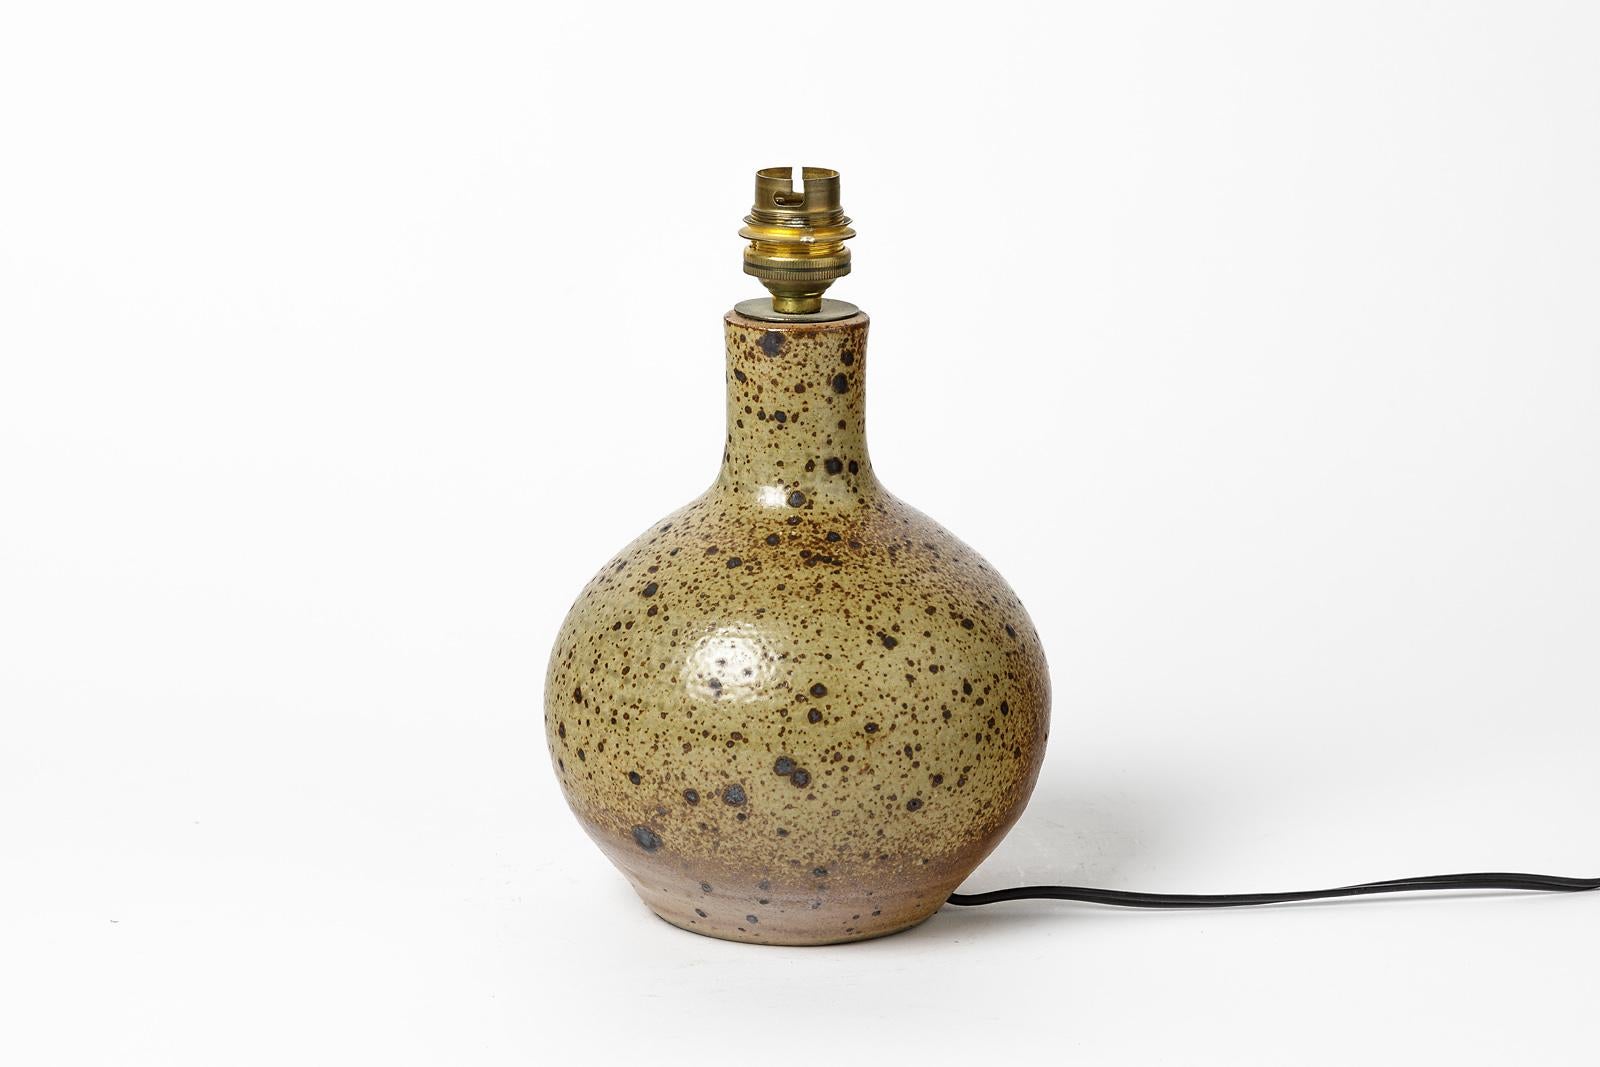 French 20th Century Stoneware Ceramic Table Lamp by La Borne Potters 1970 Design For Sale